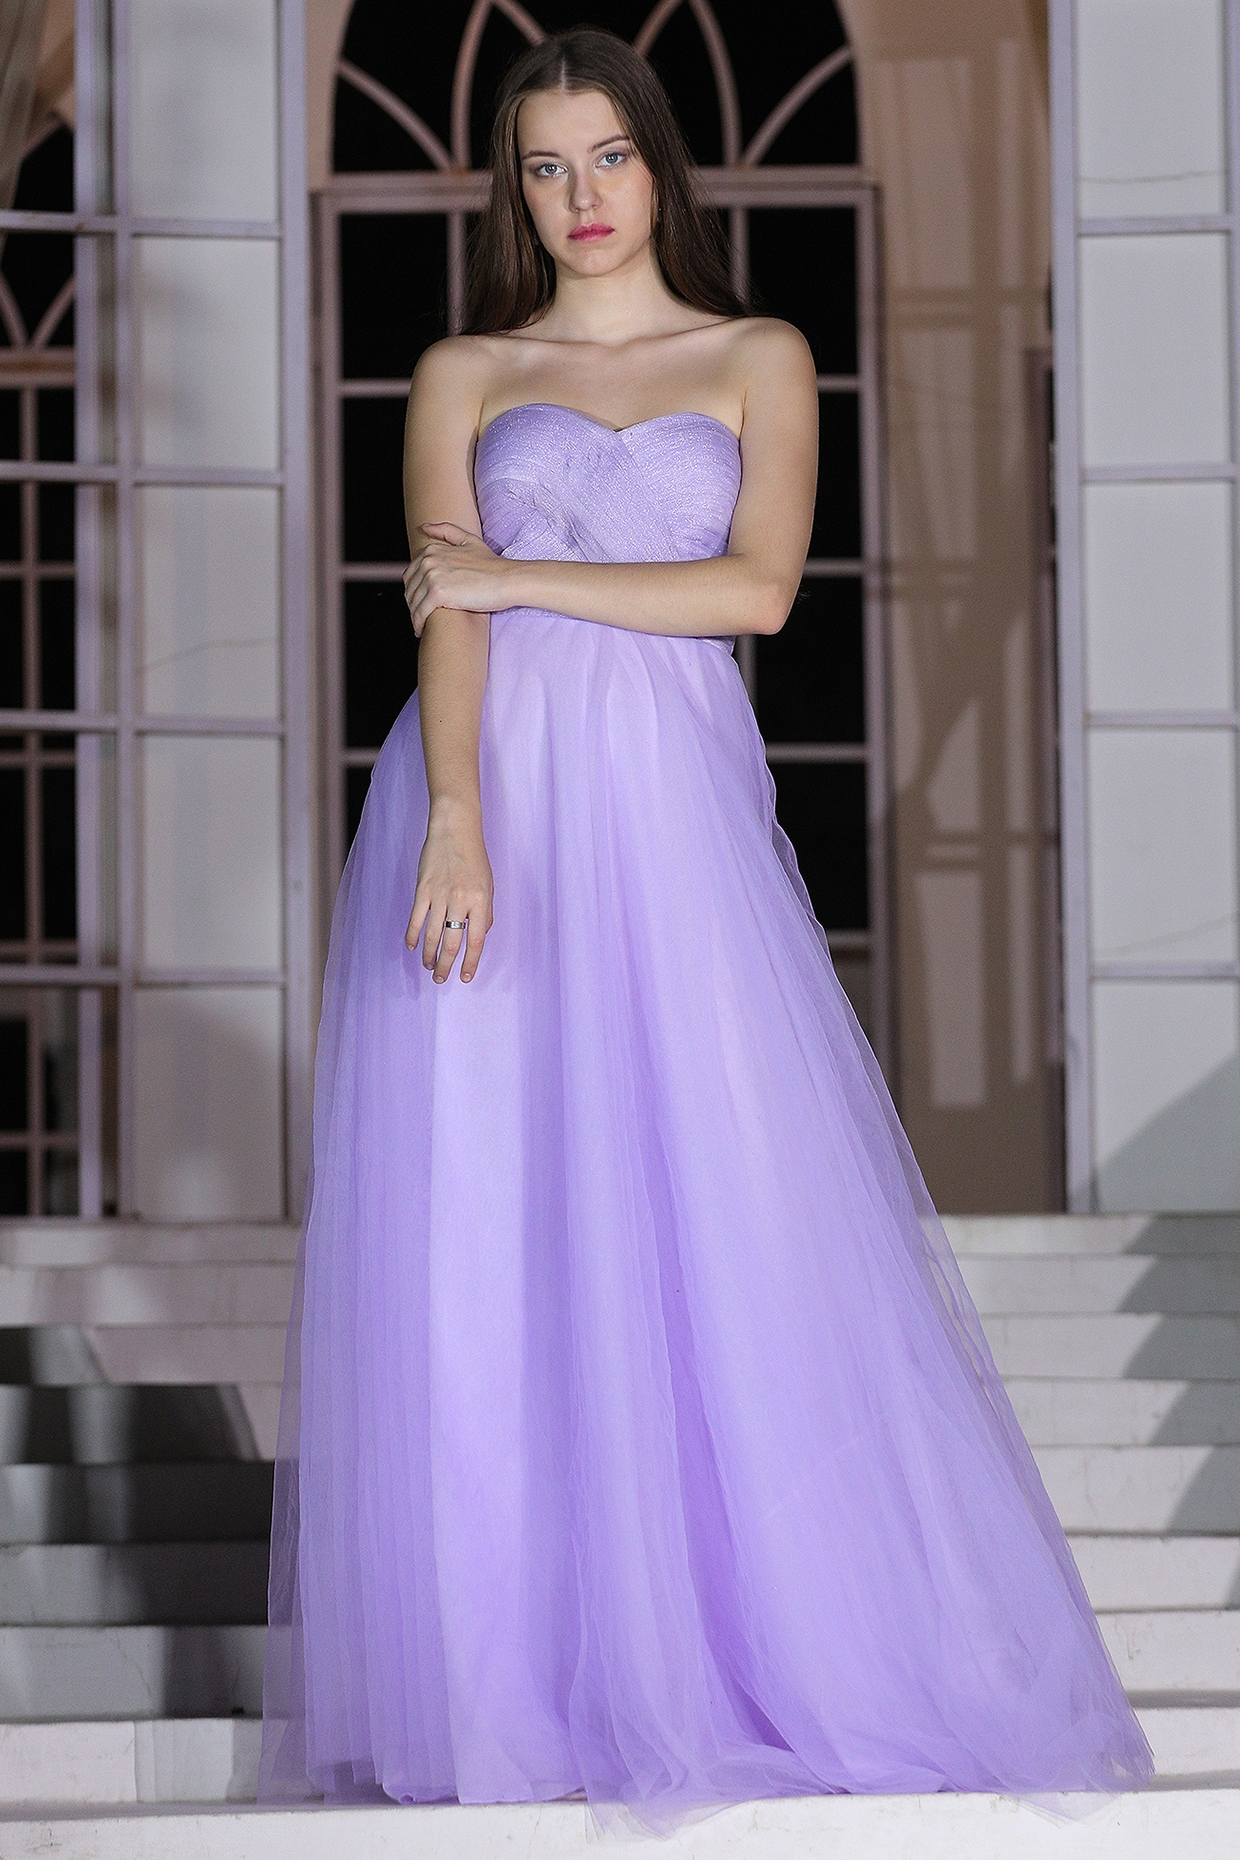 Sheer Lace Long Sleeve 2 in 1 Fashion Wedding Dress - VQ